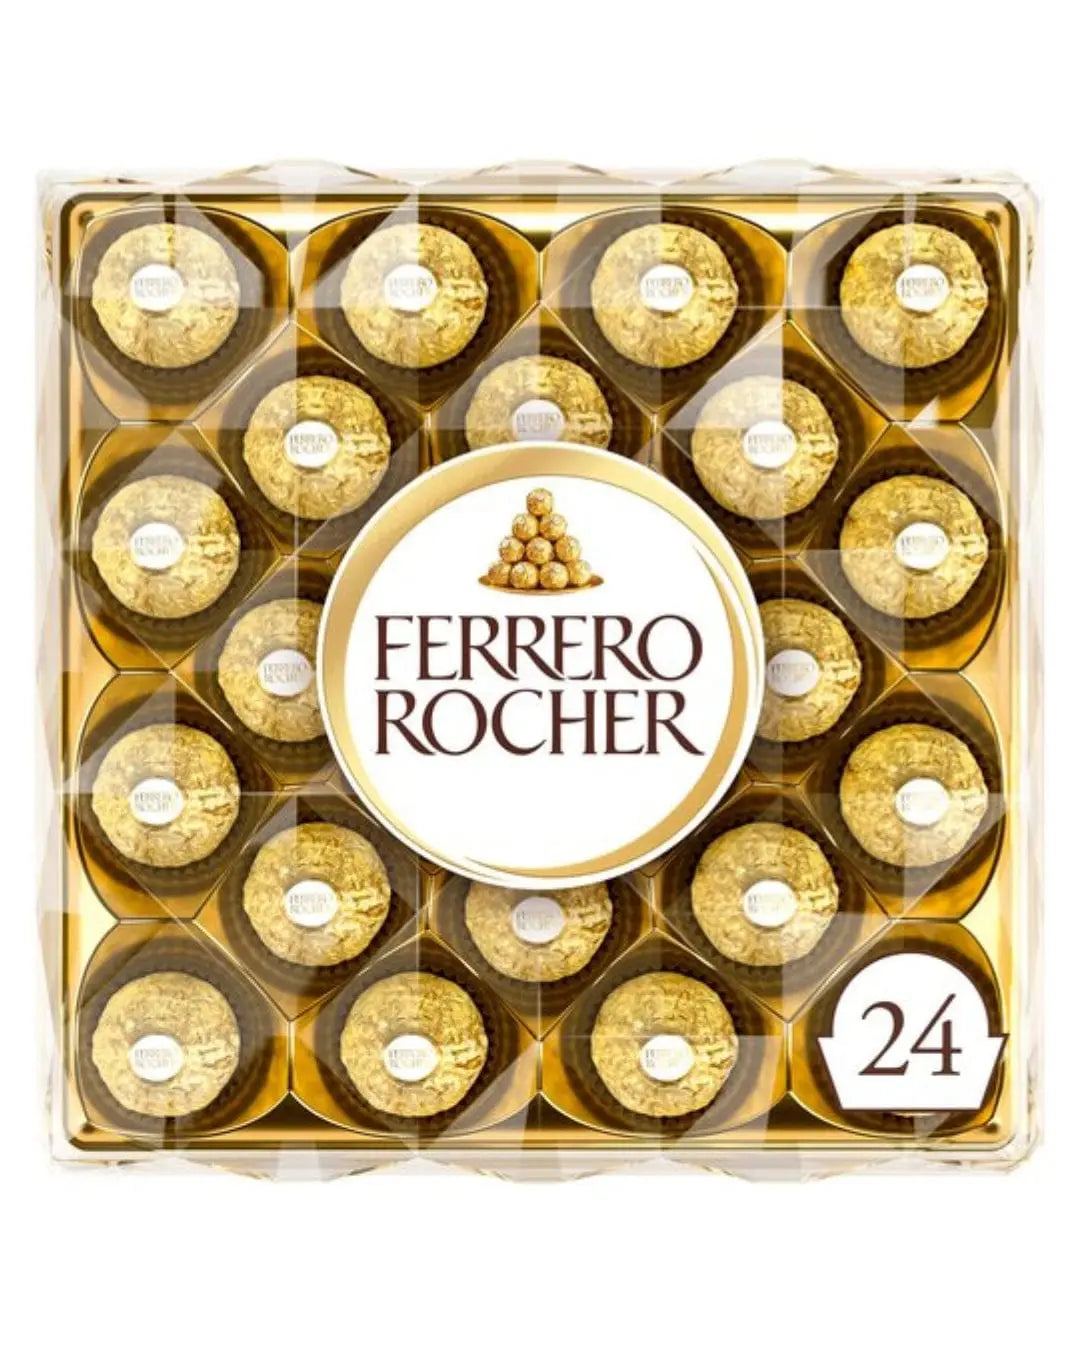 Ferrero Rocher 24 Pieces Chocolate Gift Box, 300 g Chocolate